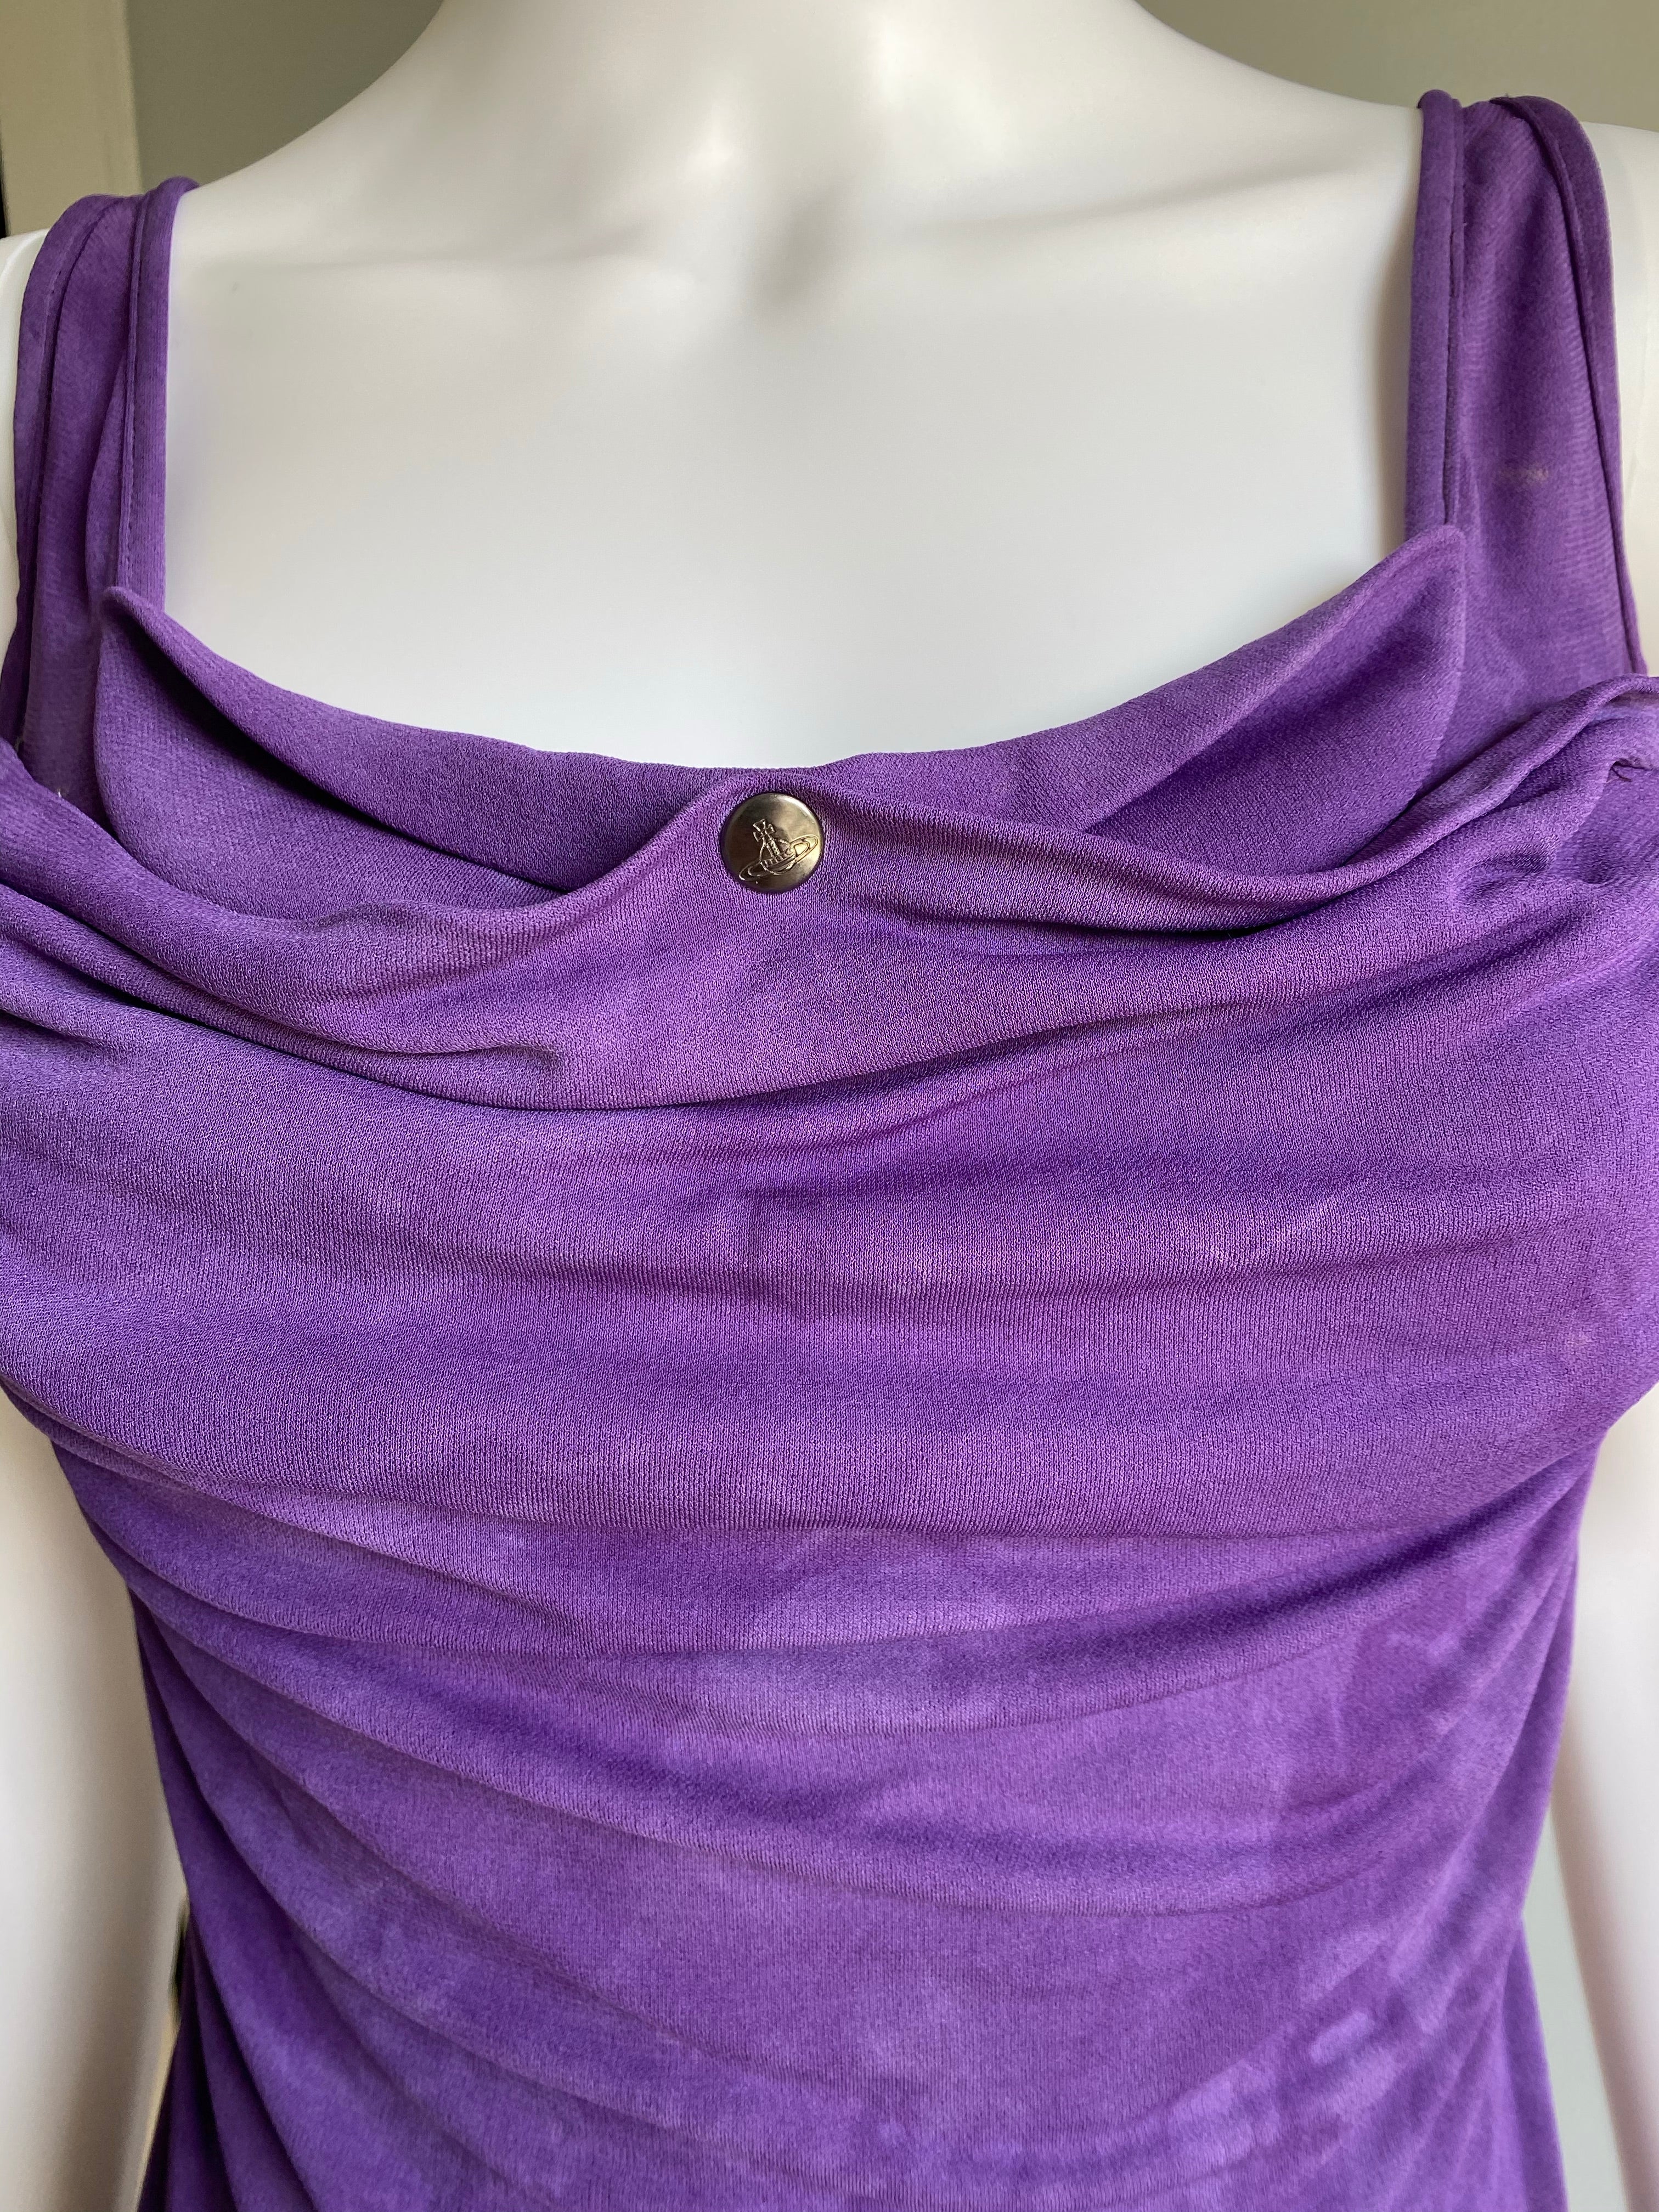 Vivienne Westwood Drape Purple Dress